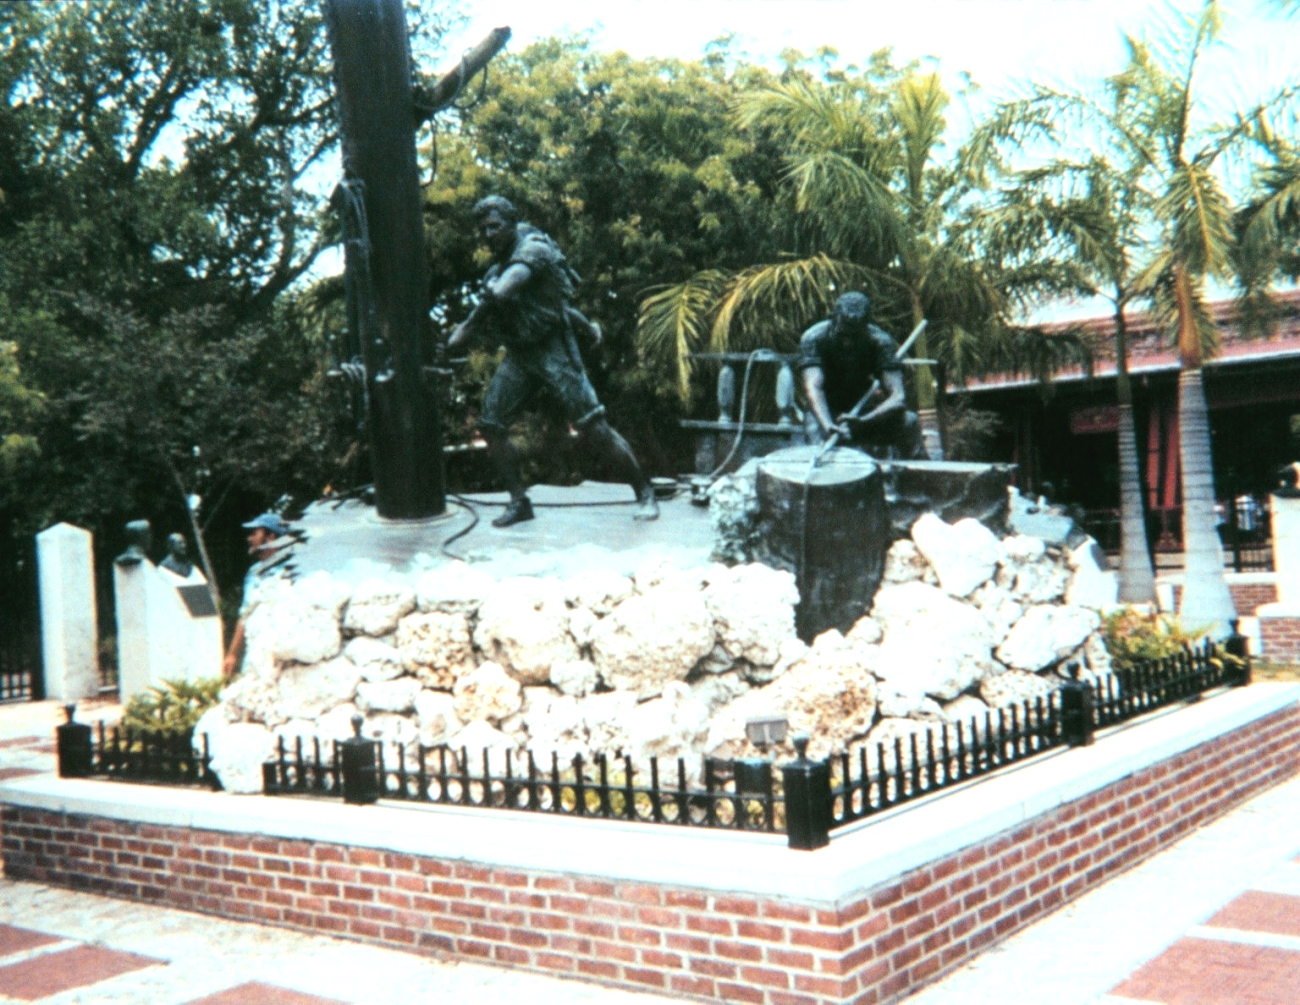 The Wrecker Memorial at Key West